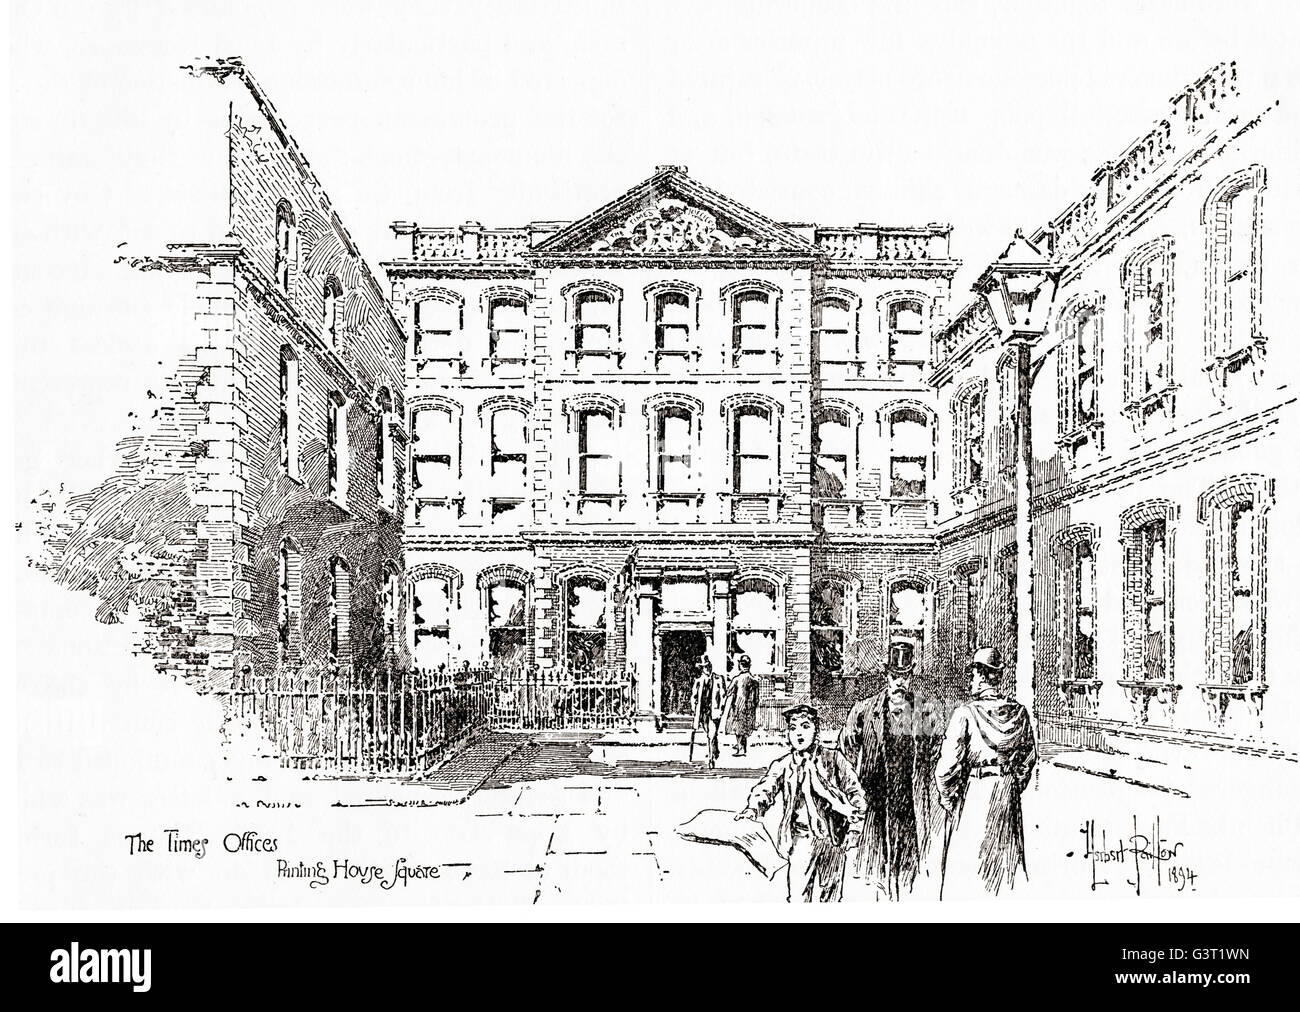 Die Zeiten Office Printing House Square, London, England im 19. Jahrhundert. Stockfoto